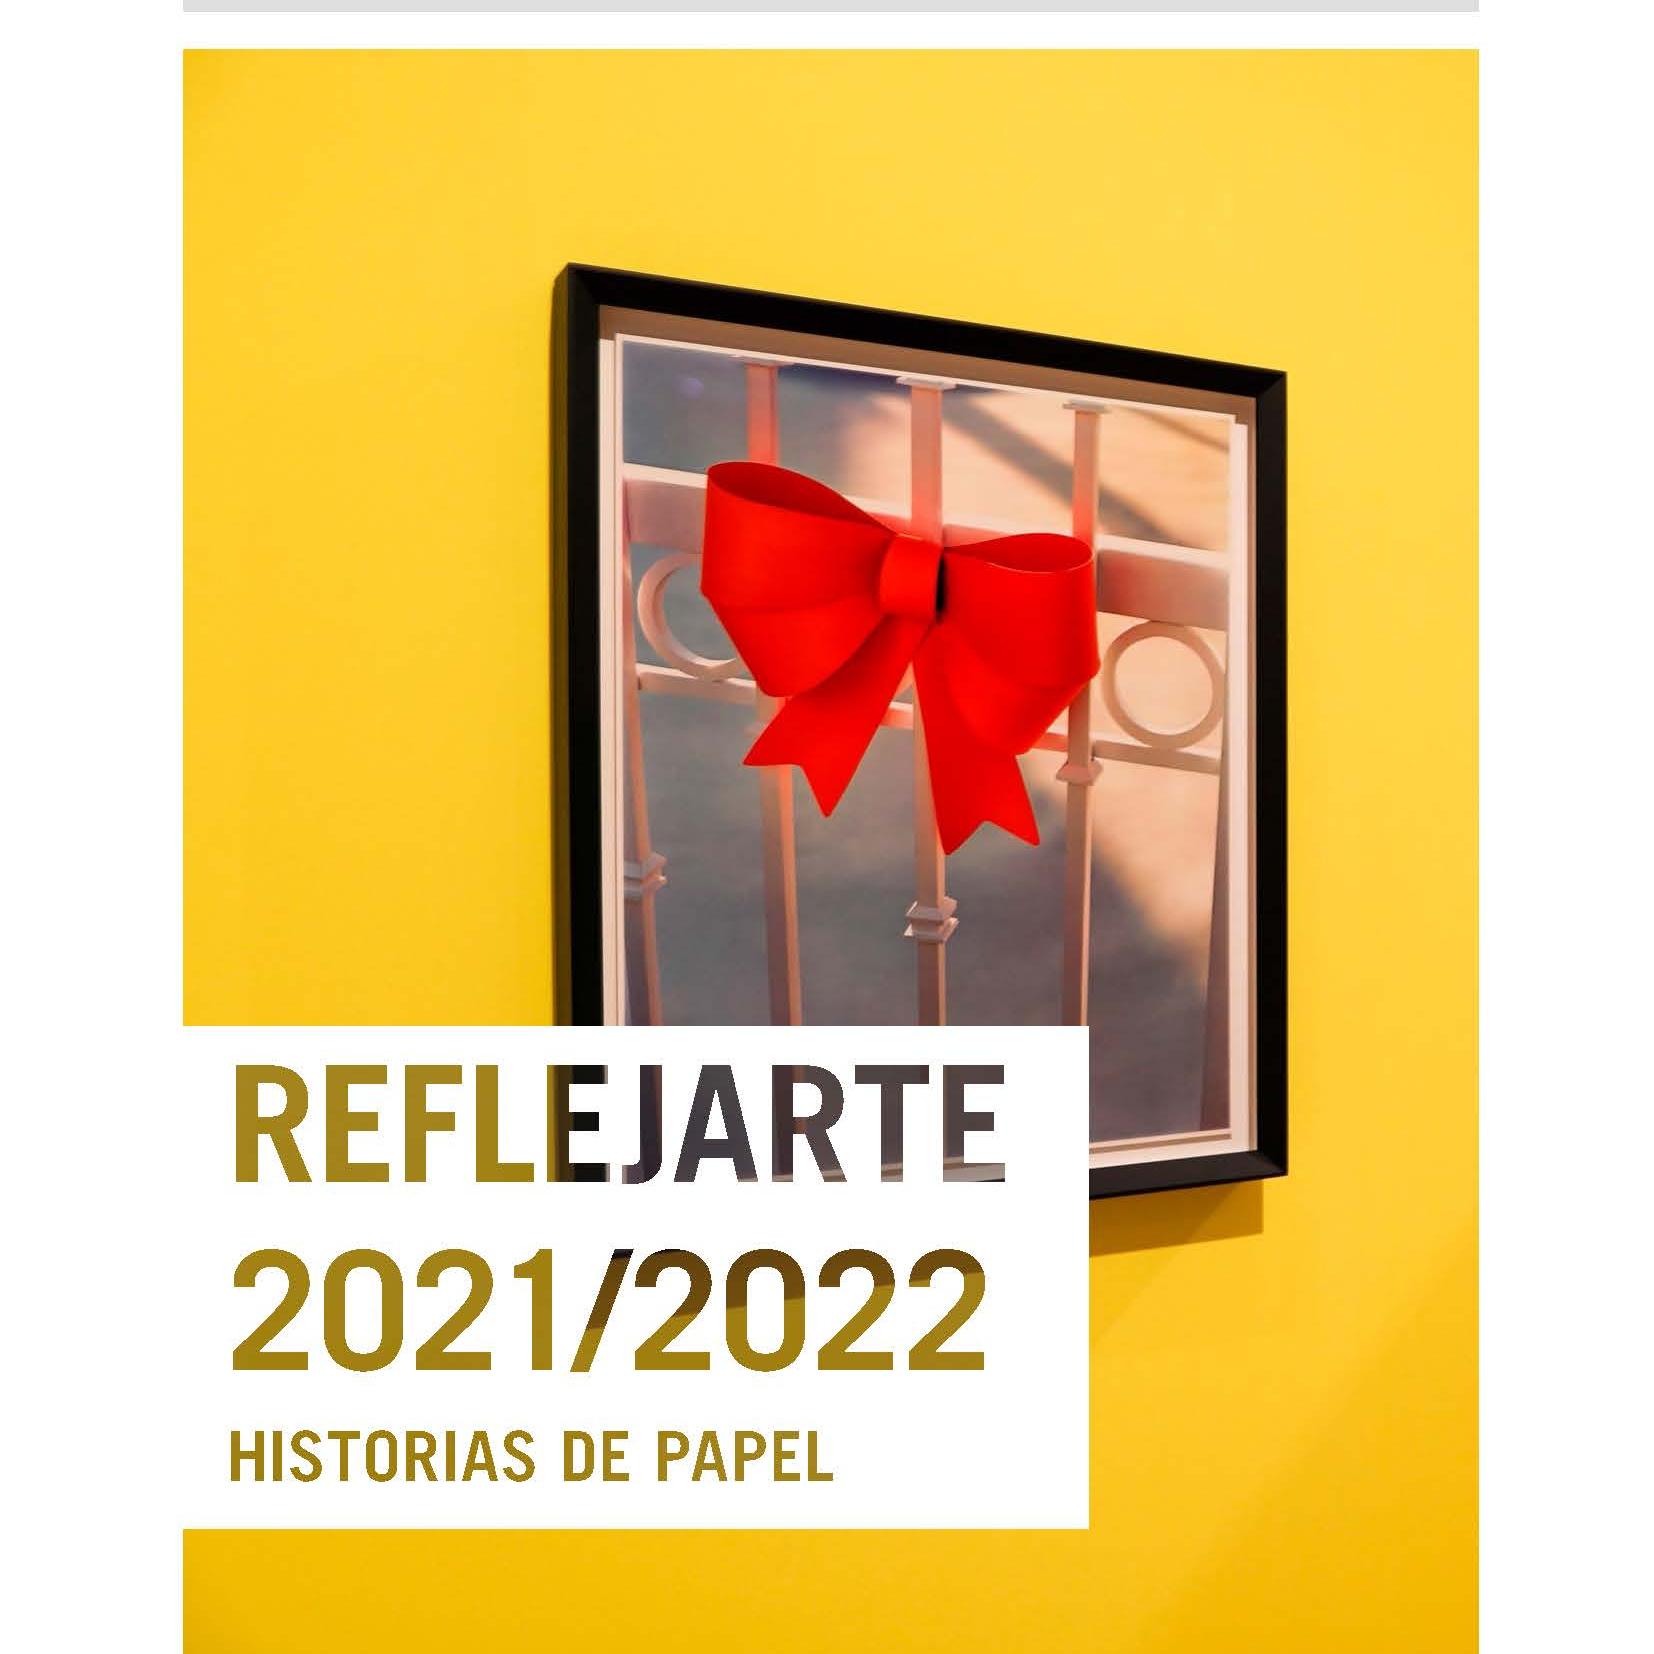 ReflejArte 2021/2022. Historias de papel